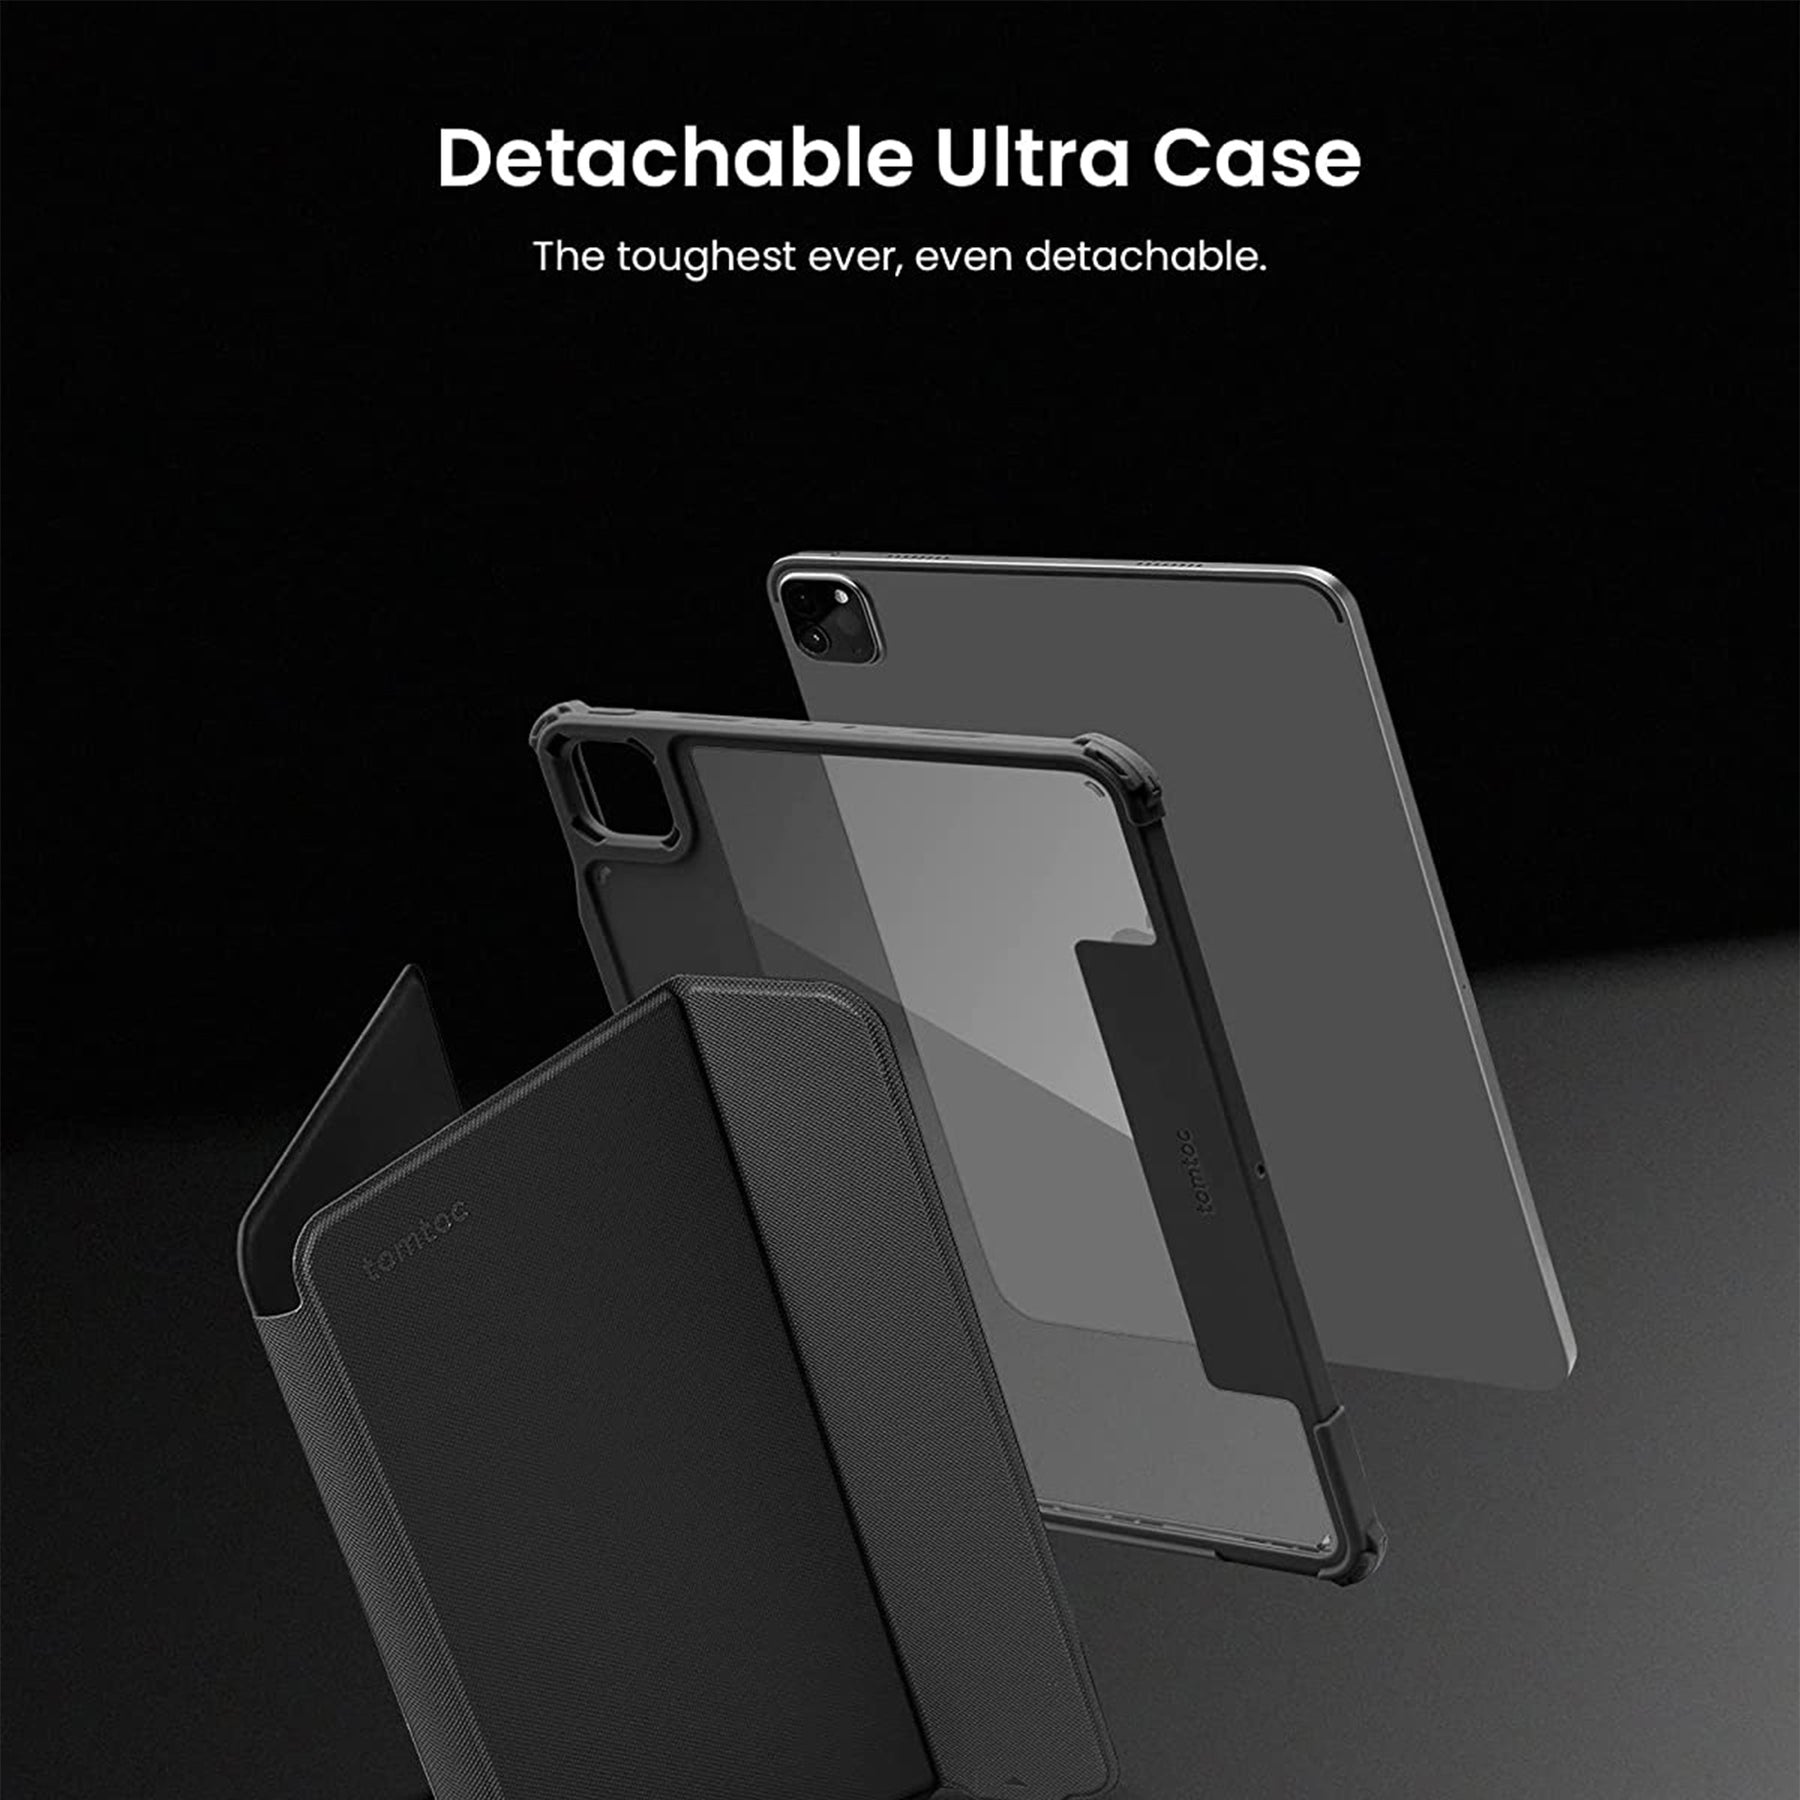 tomtoc 11 Inch iPad Pro Wireless Apple Pencil Charging / Detachable Protective Case - Diamond Black